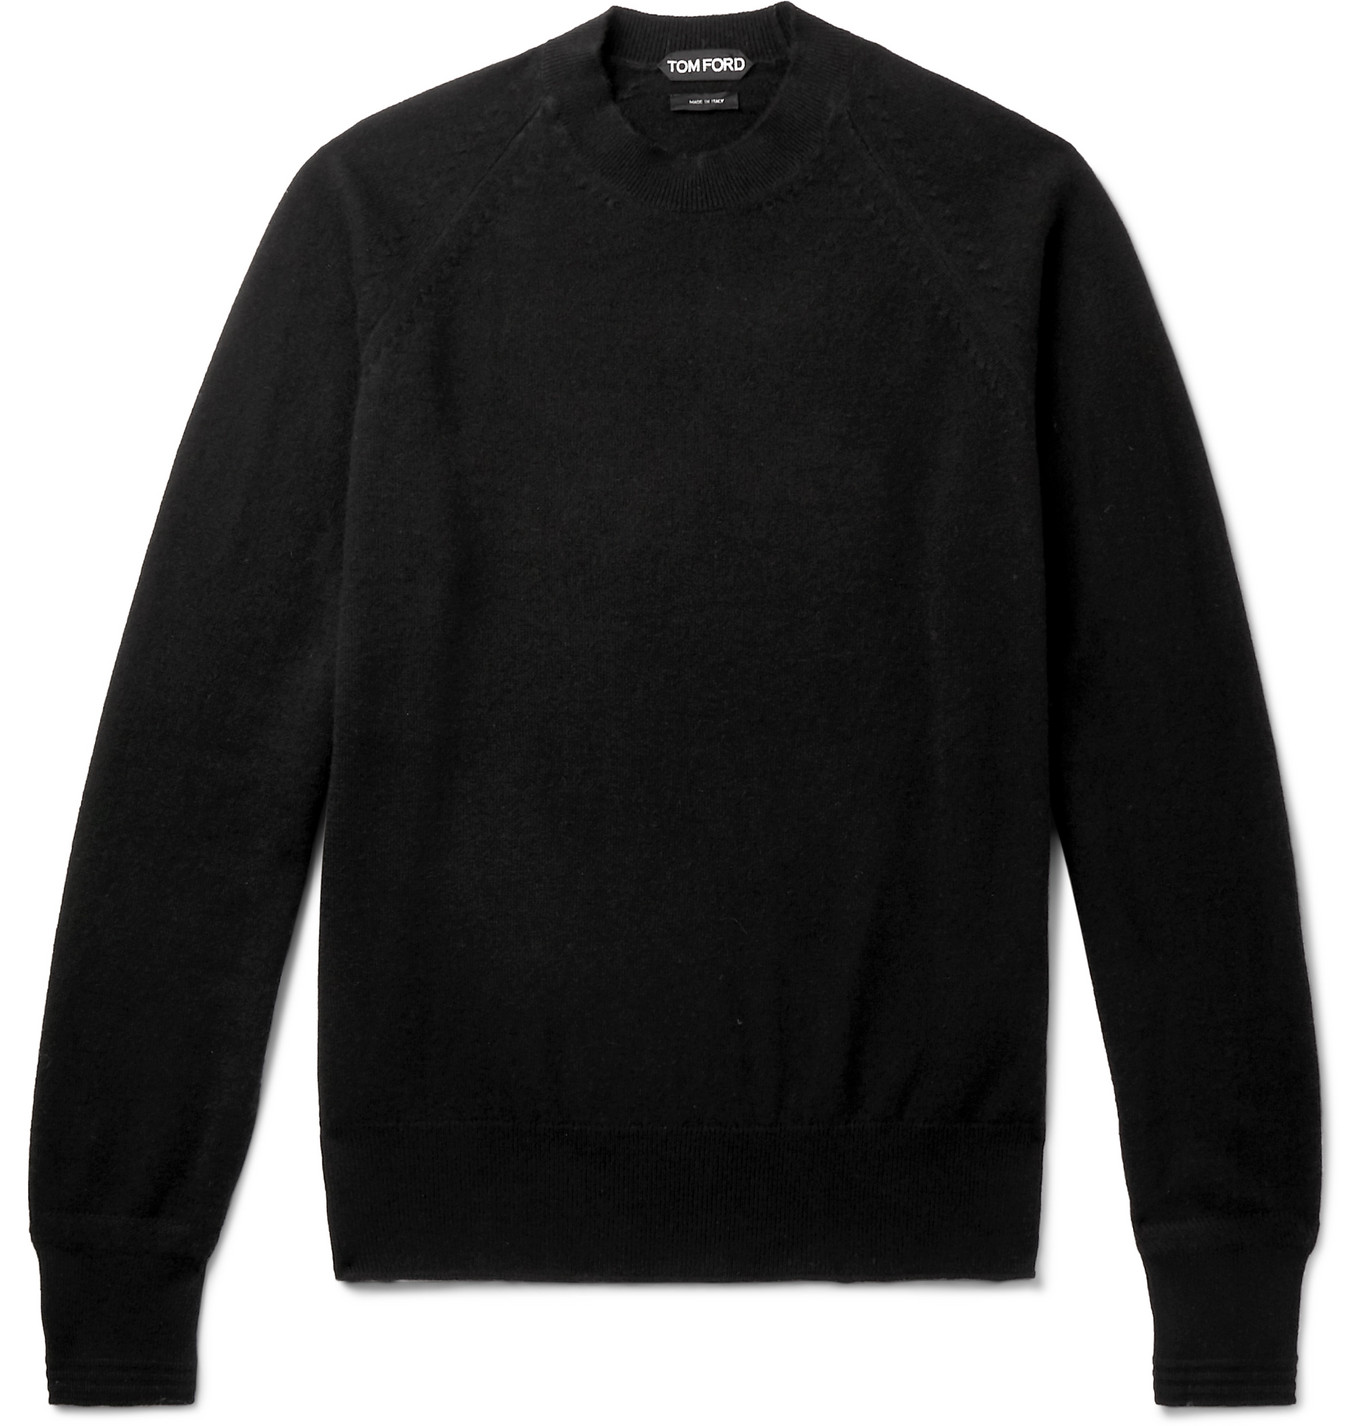 TOM FORD - Cashmere Sweater - Men - Black | The Fashionisto